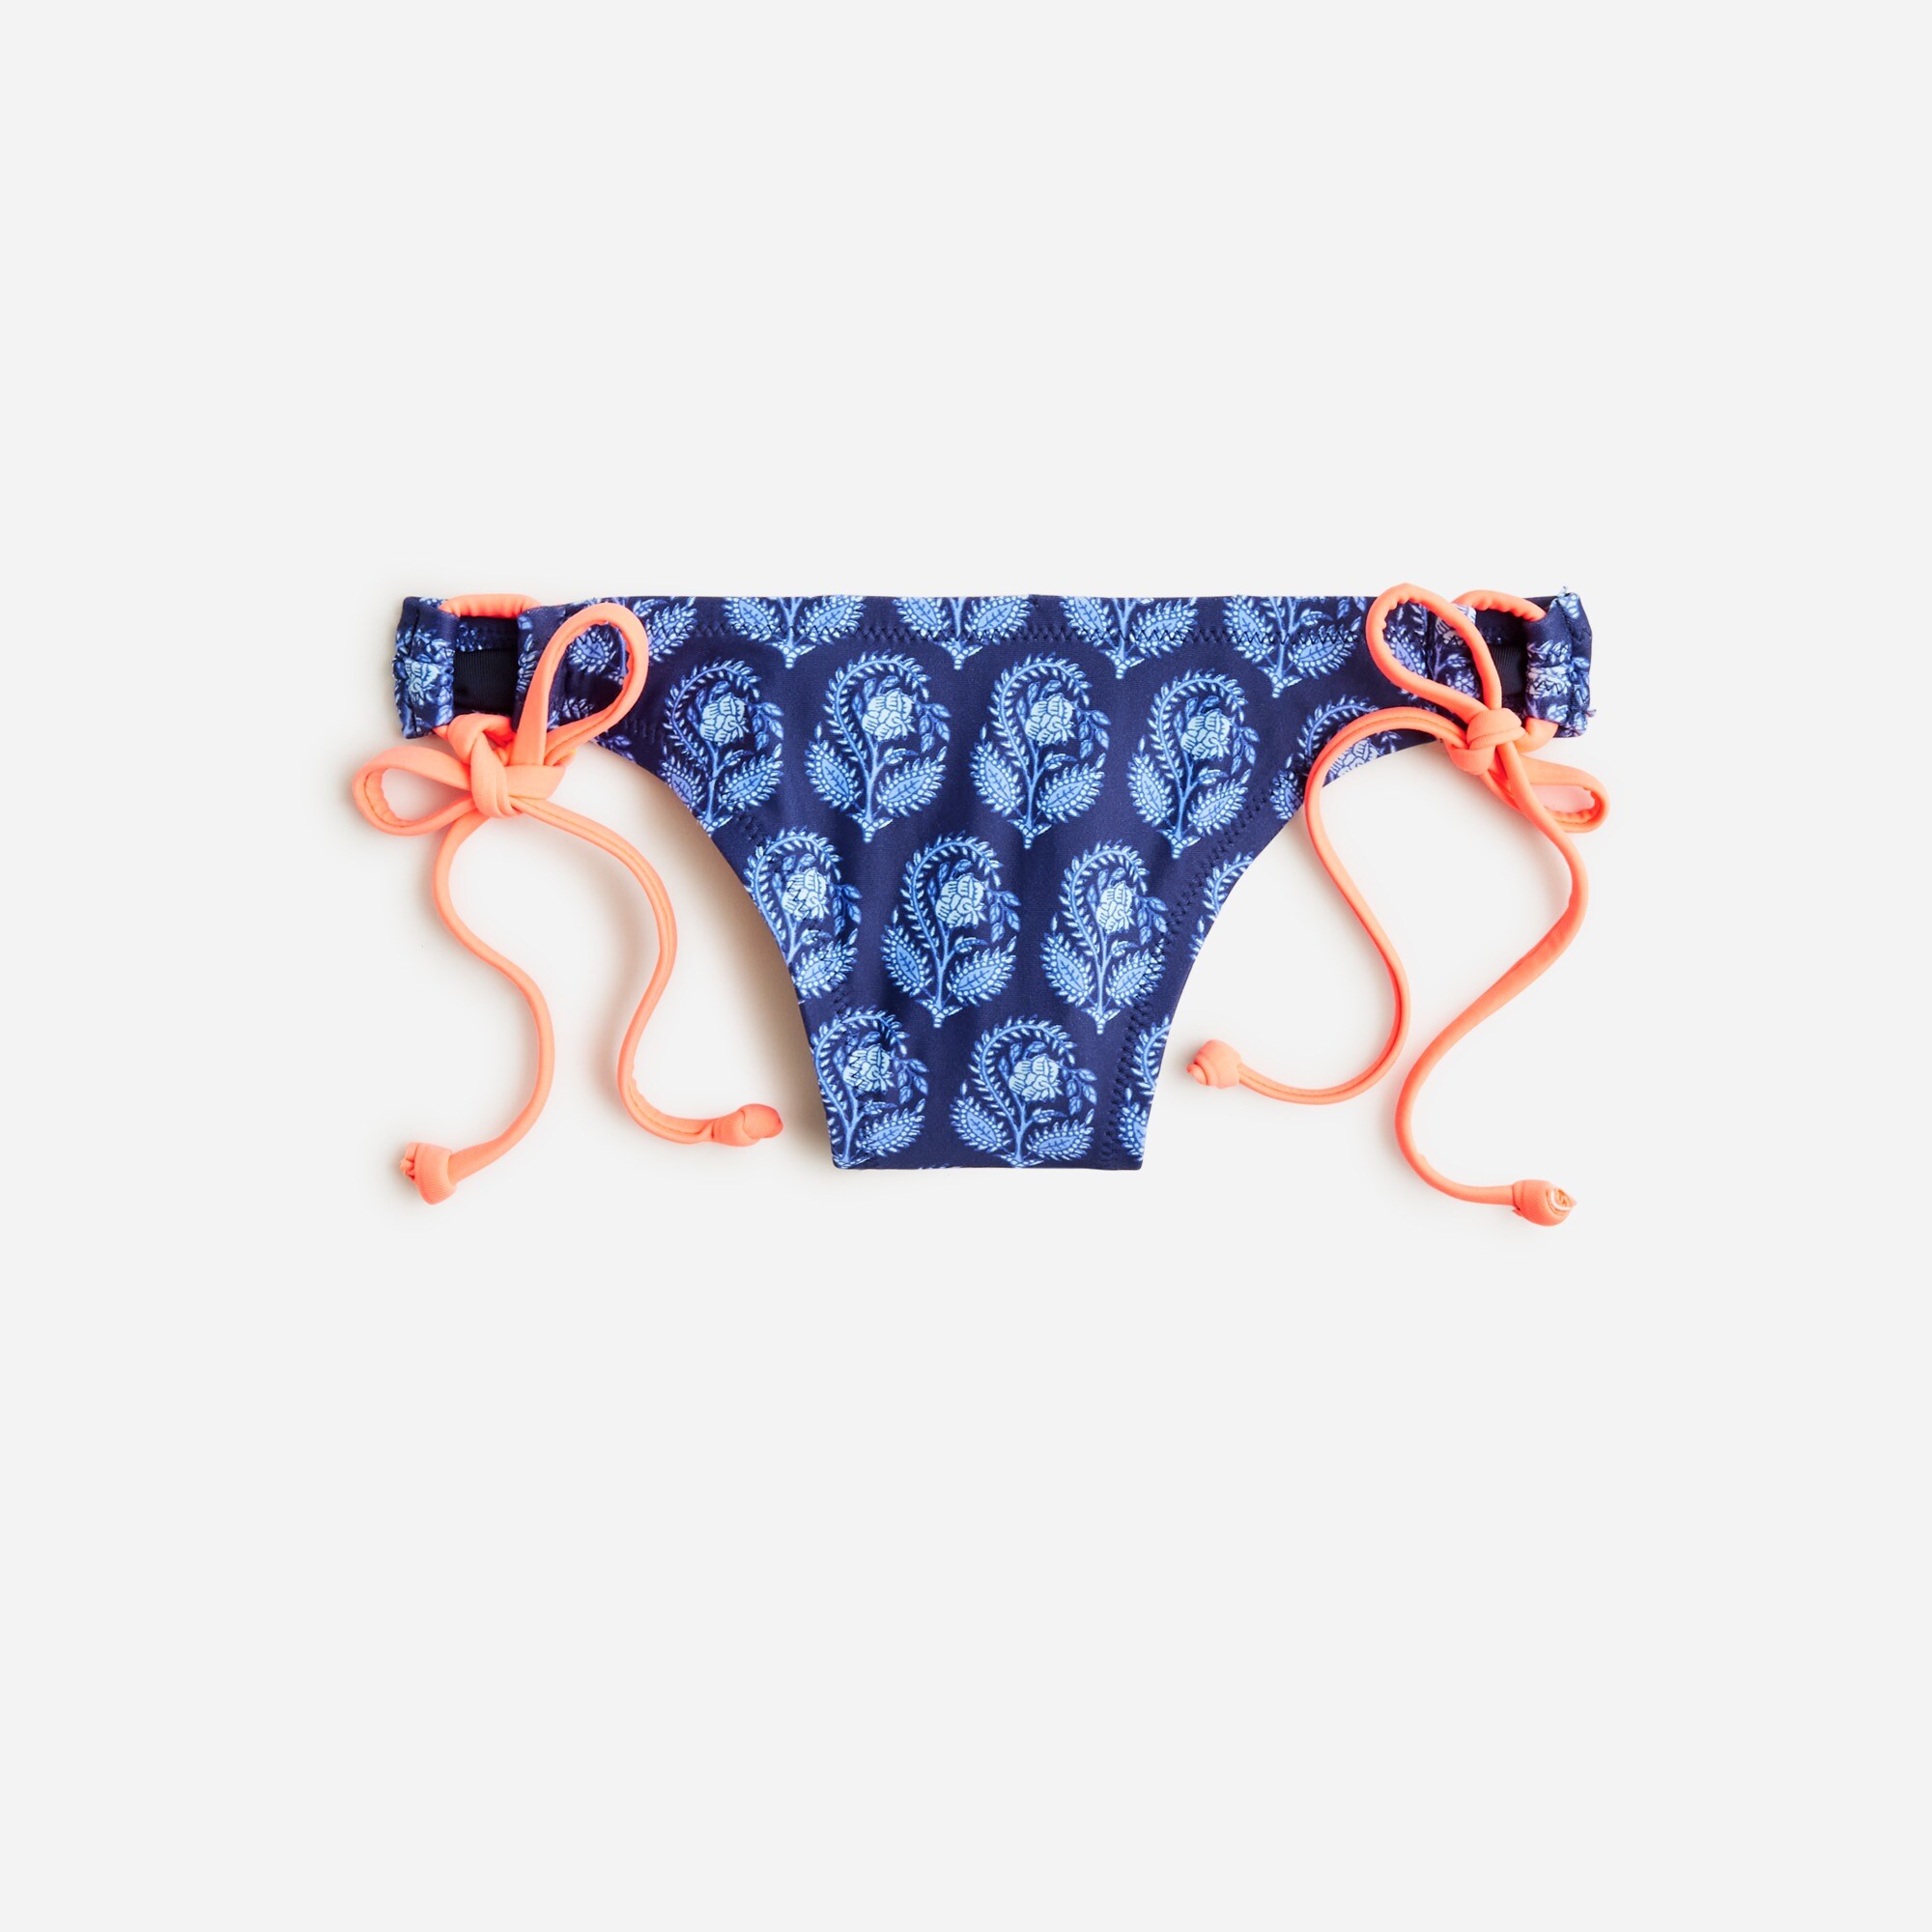  String bikini bottom with side ties in navy bouquet block print